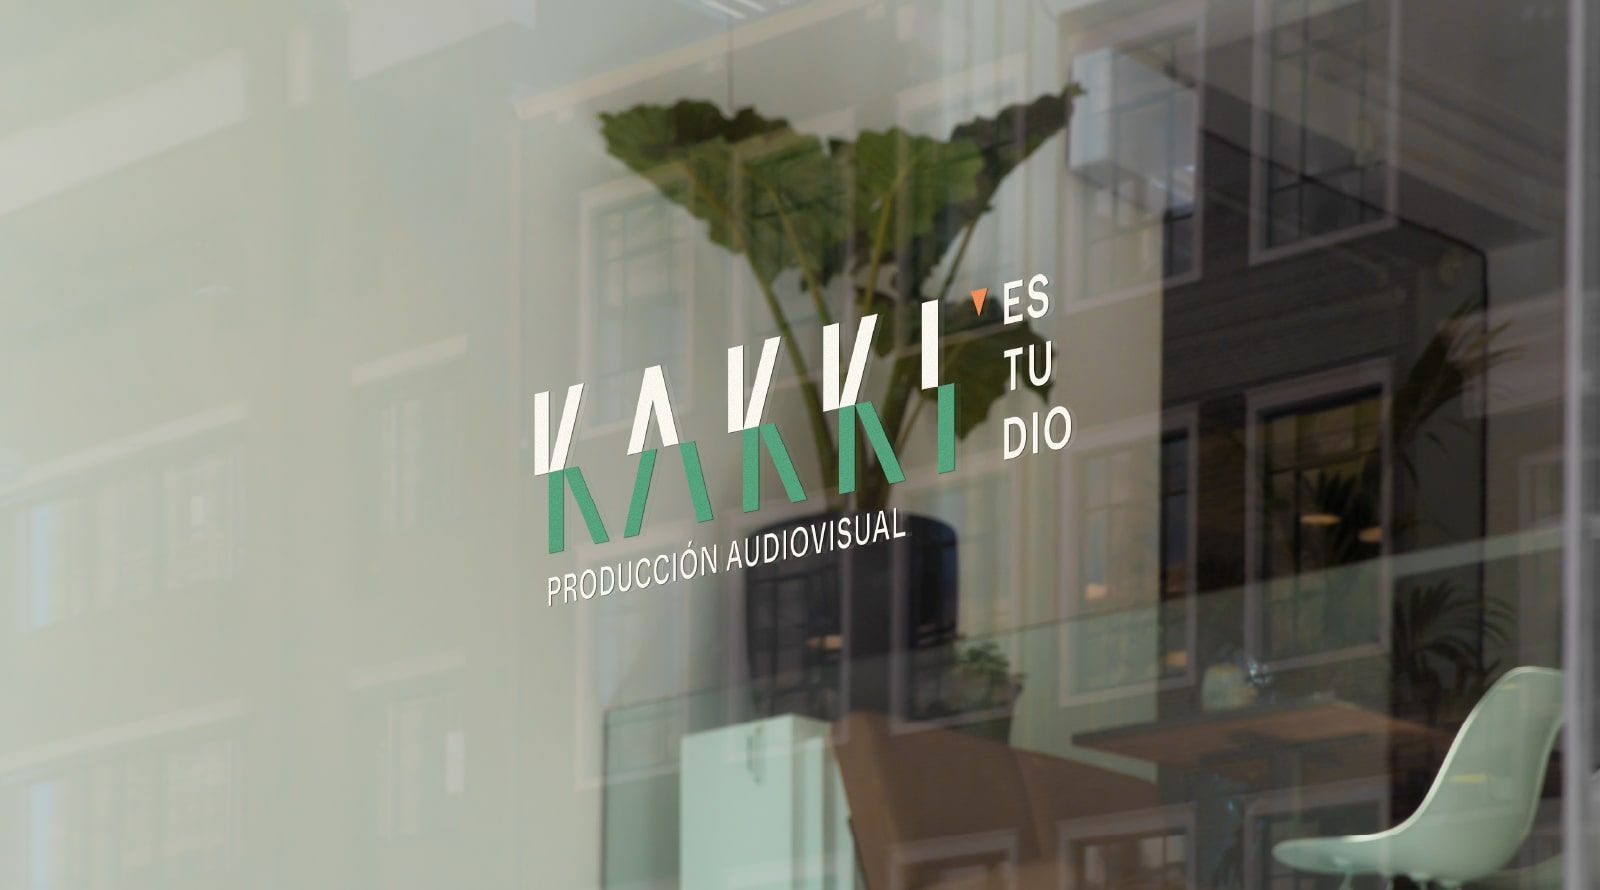 Kakki Estudio - Naming y Branding para Productora Audiovisual - Vigo